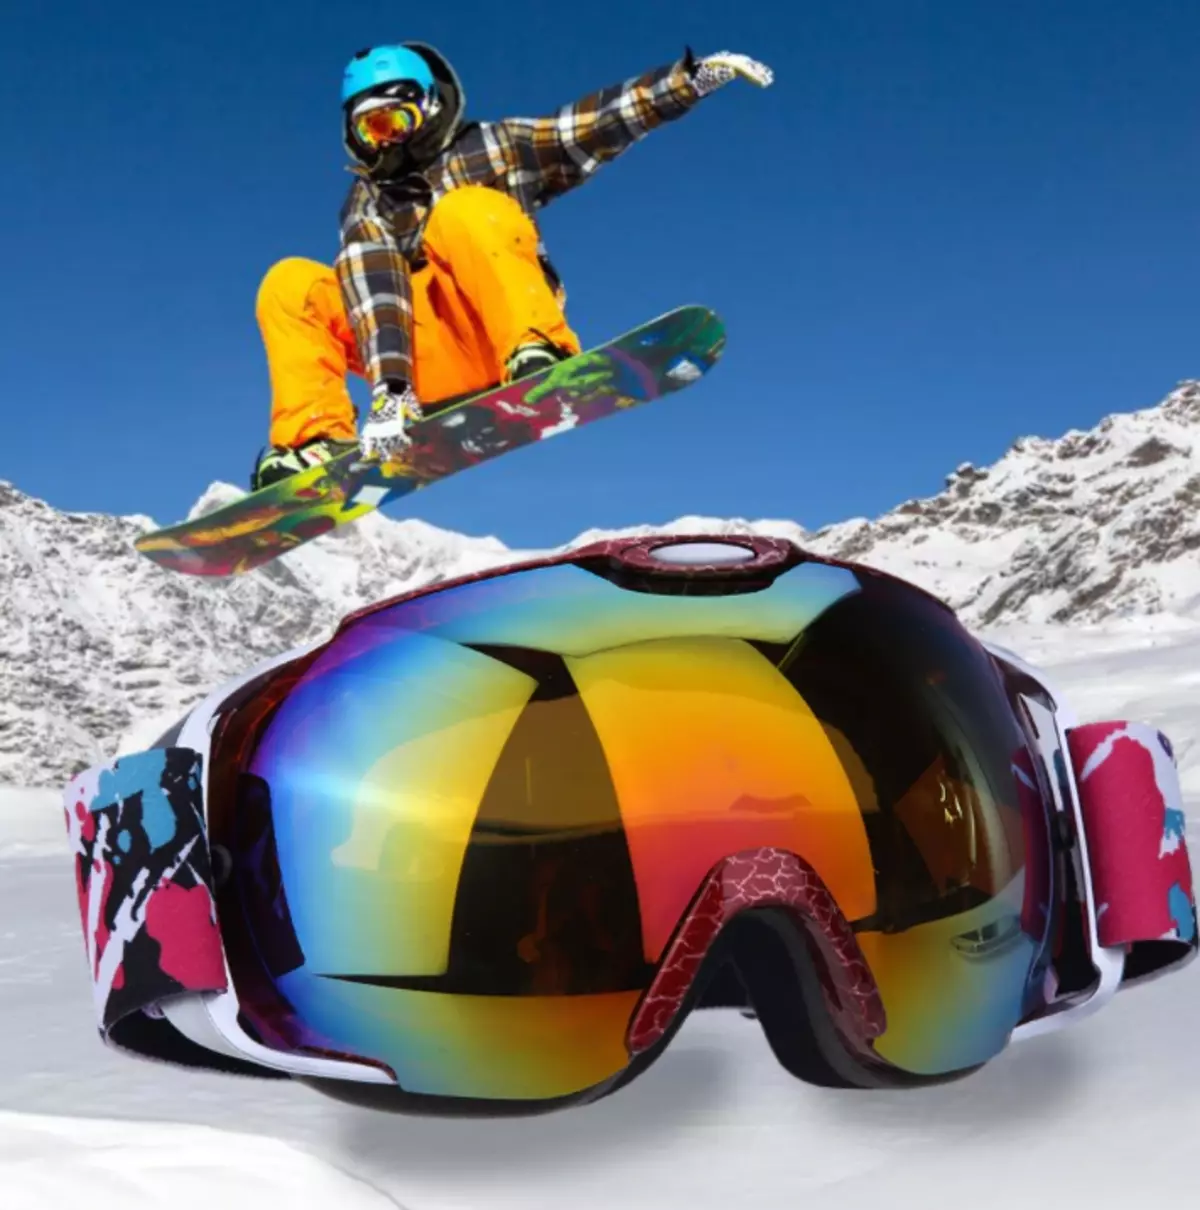 Kacamata Snowboard: Cara Memilih Kacamata Masker untuk Bermain Ski? Poin Terbaik Dengan Dioptias, Roxy dan Model Snowboarder Lainnya 20291_36